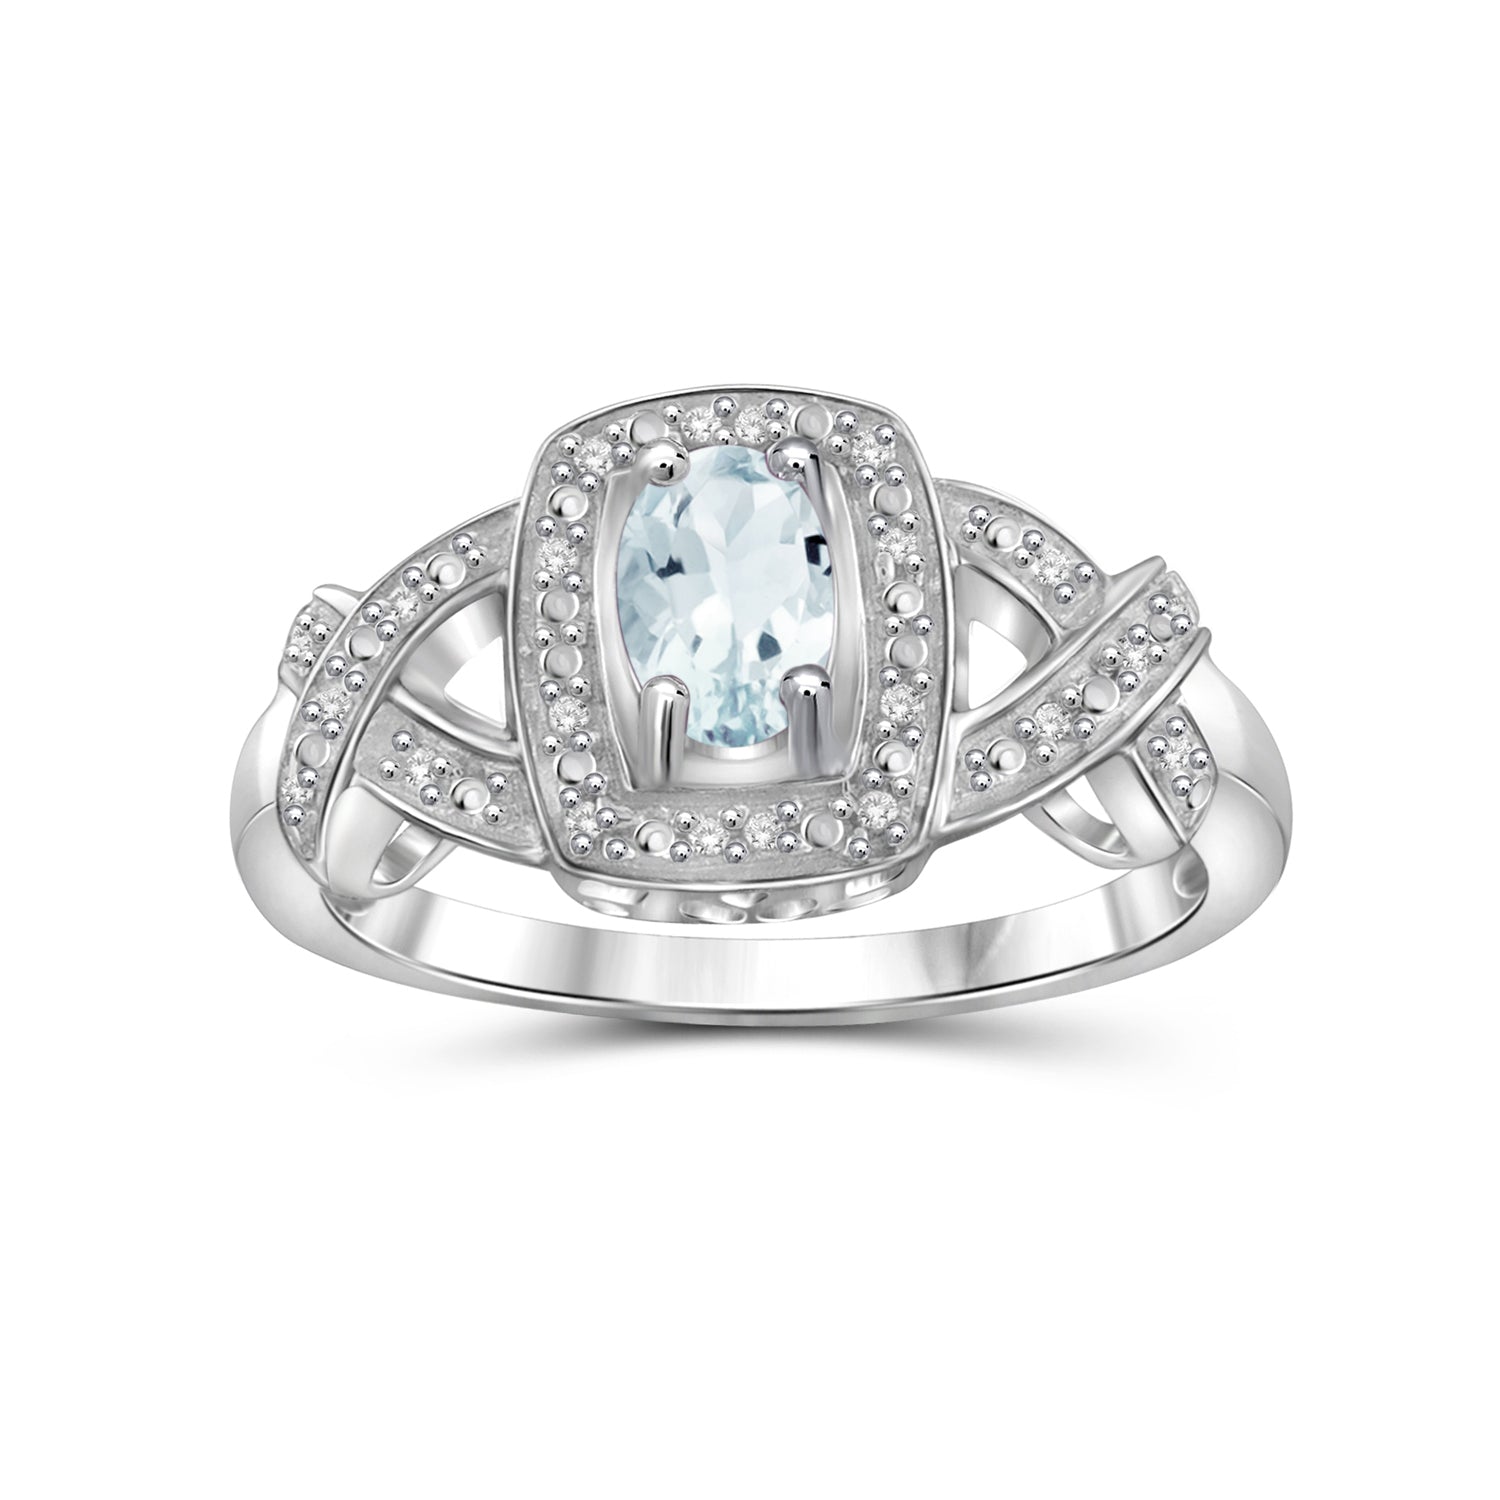 0.44 Carat T.G.W. Aquamarine Gemstone and 1/20 Carat T.W. White Diamond Sterling Silver Ring